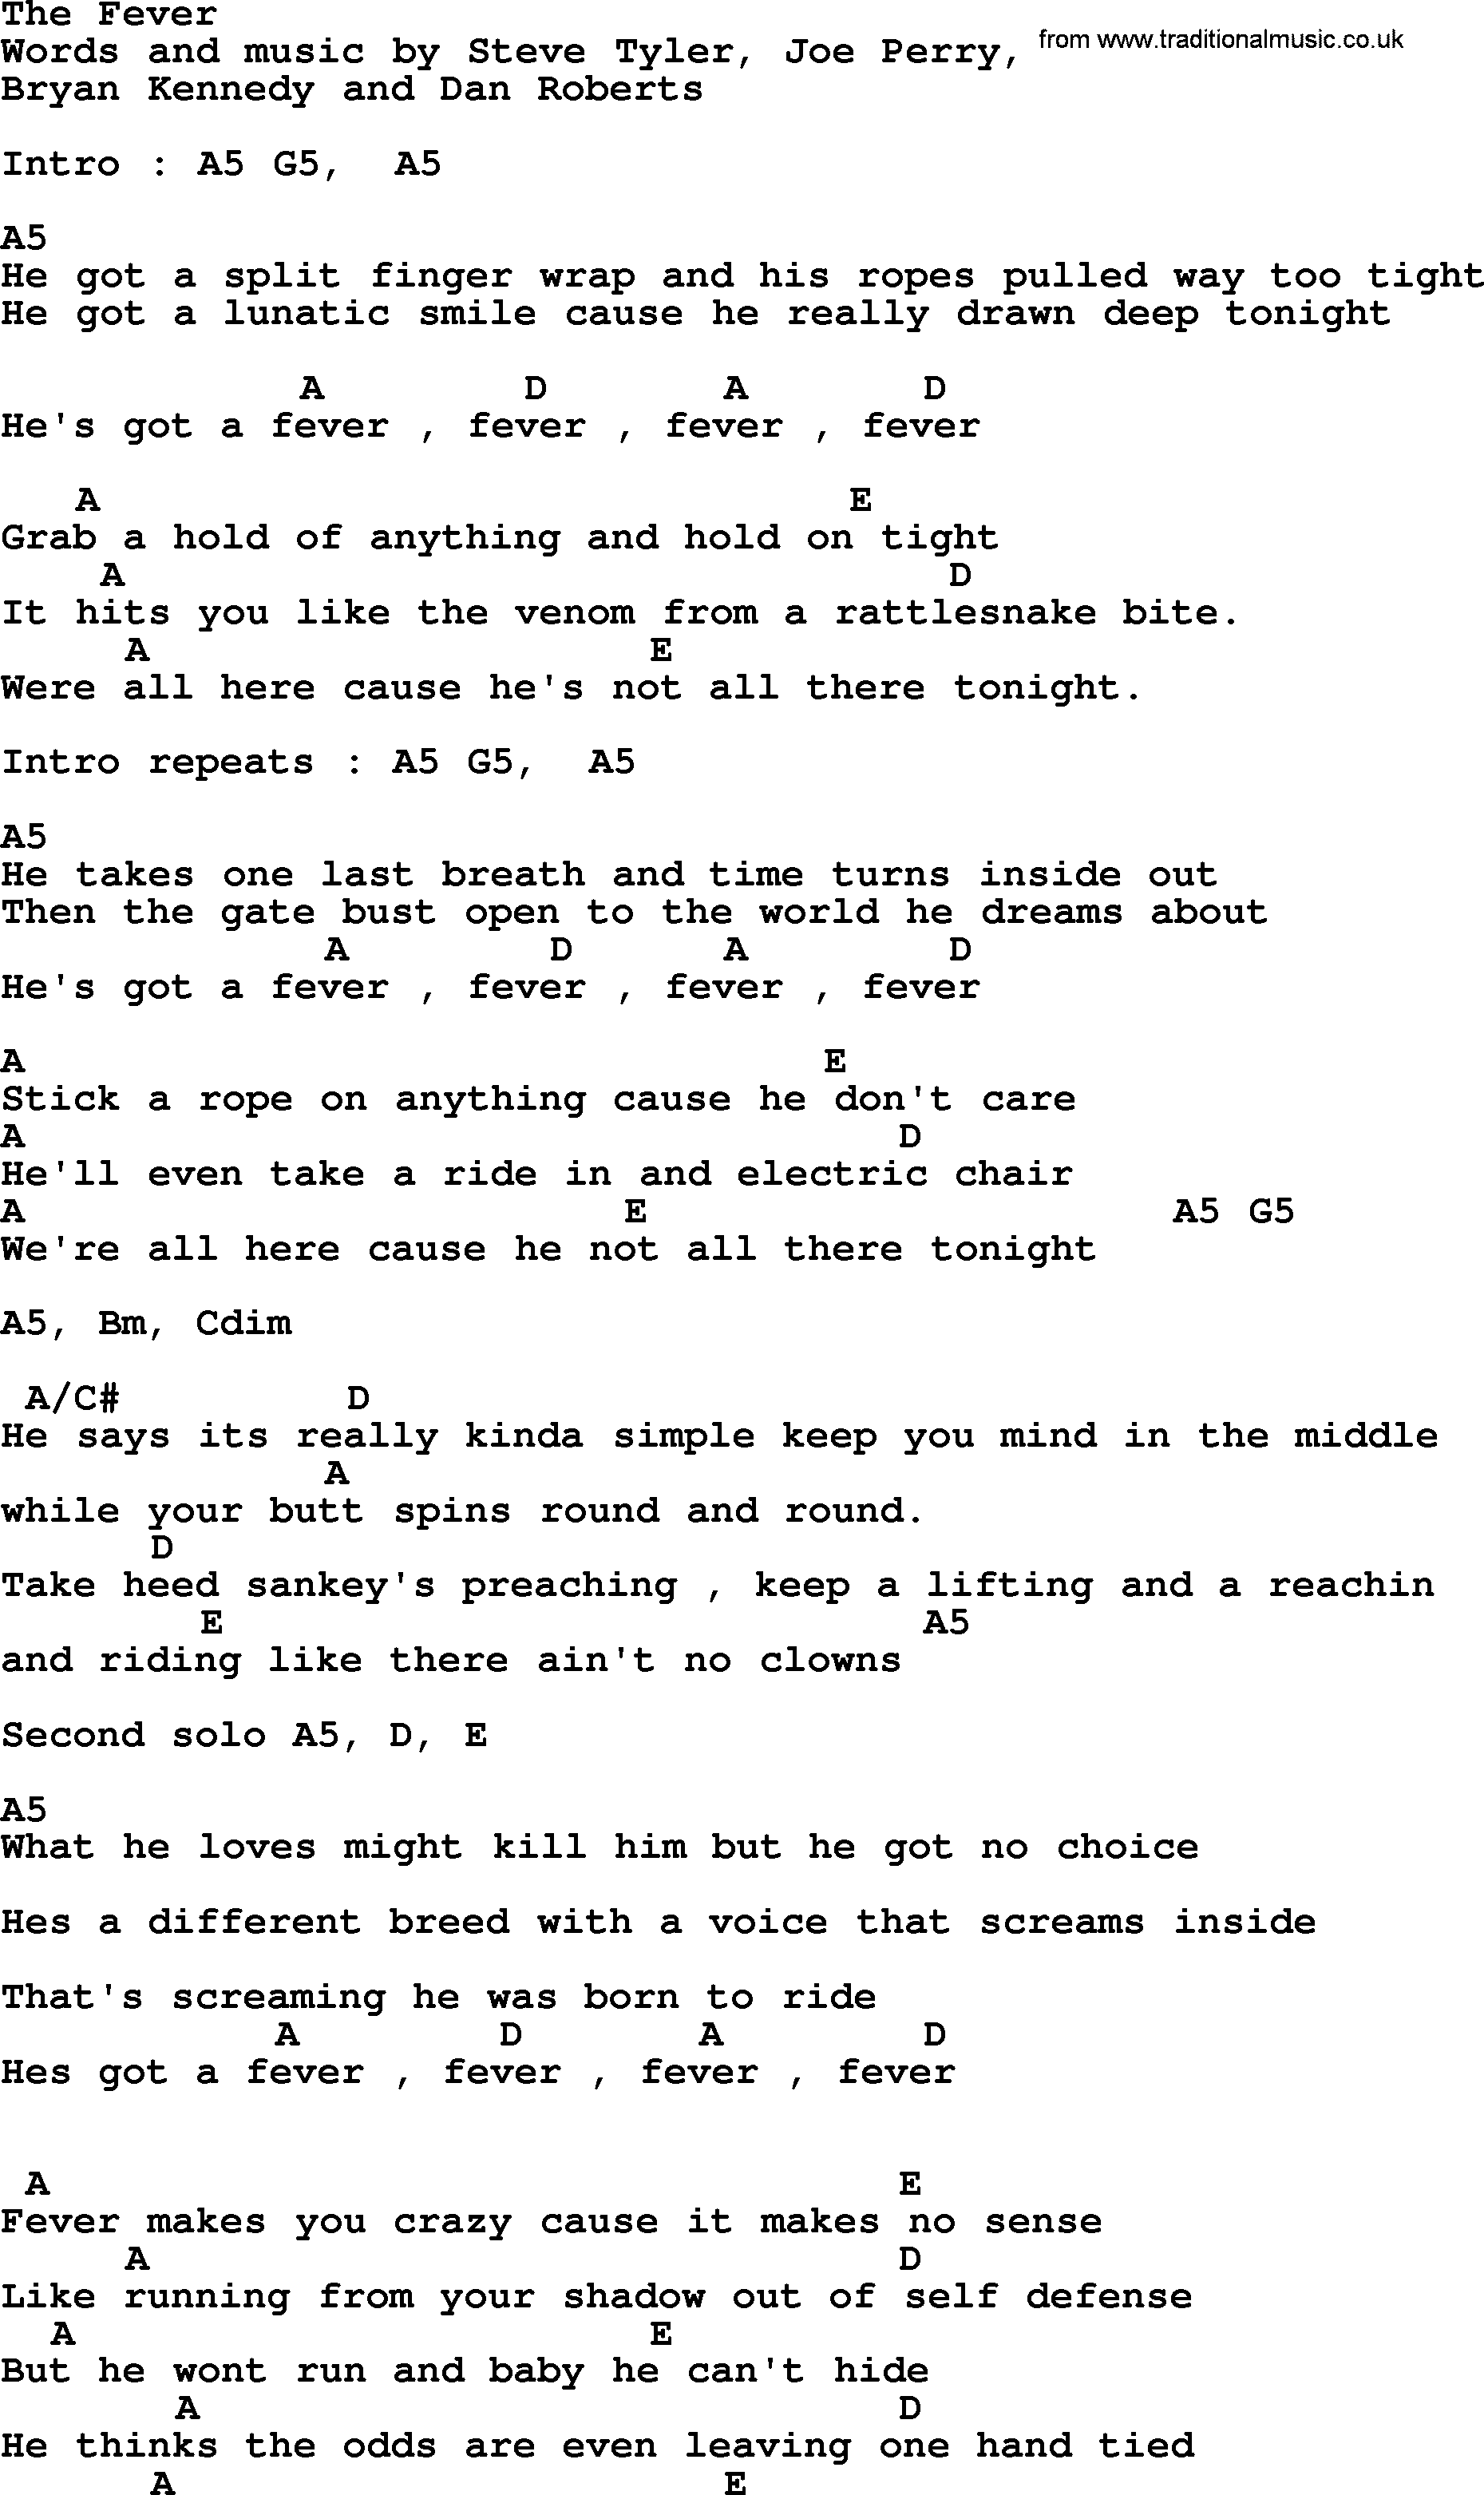 Garth Brooks song: The Fever, lyrics and chords